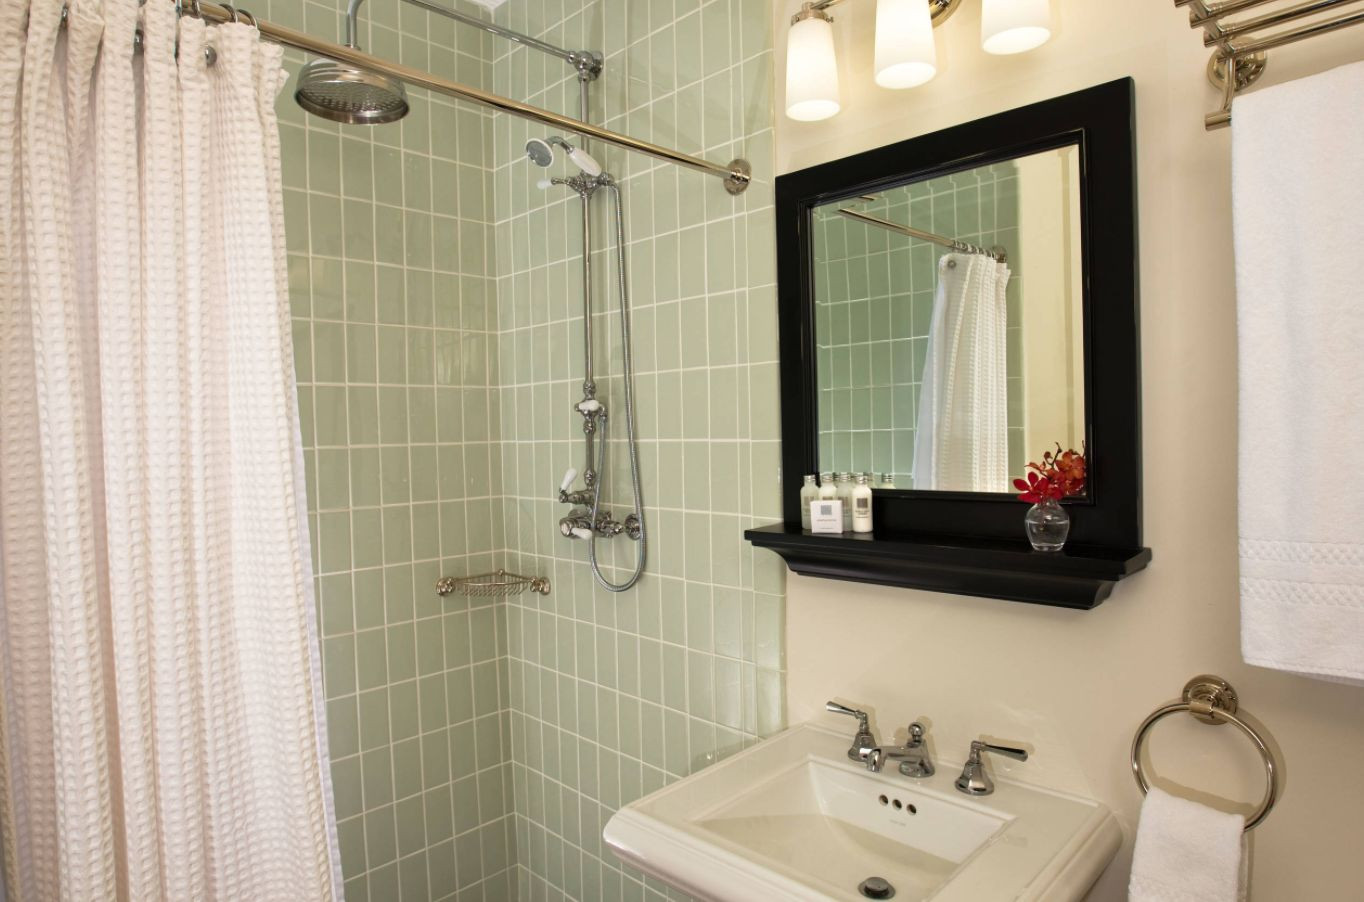 Big Lots Bathroom Vanities
 The Mirror With Shelf bo Sleek And Practical Design Ideas